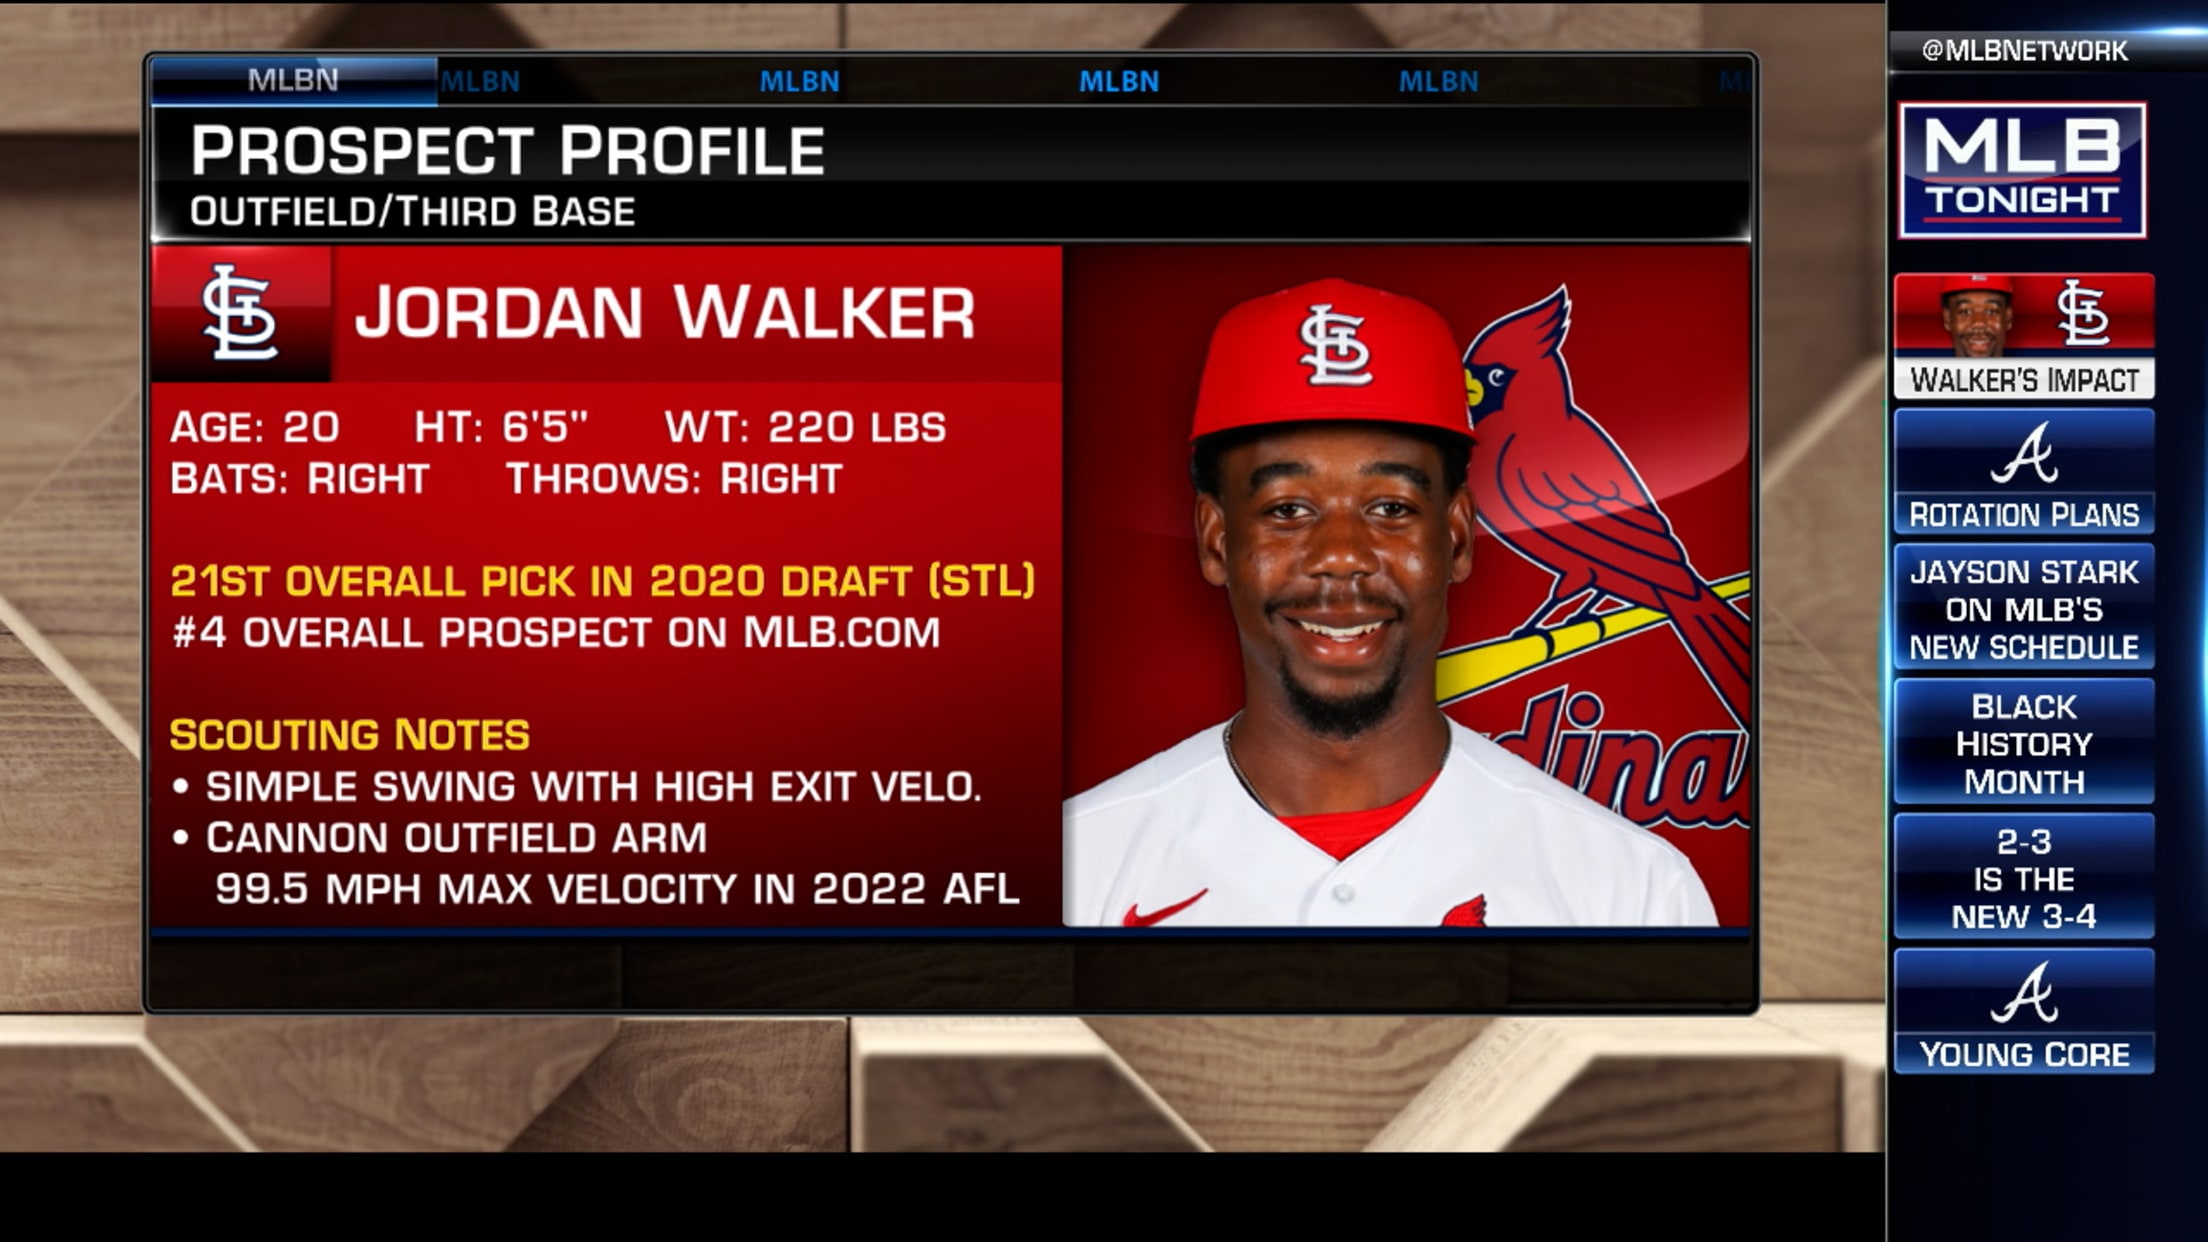 Walker's impact on Cardinals